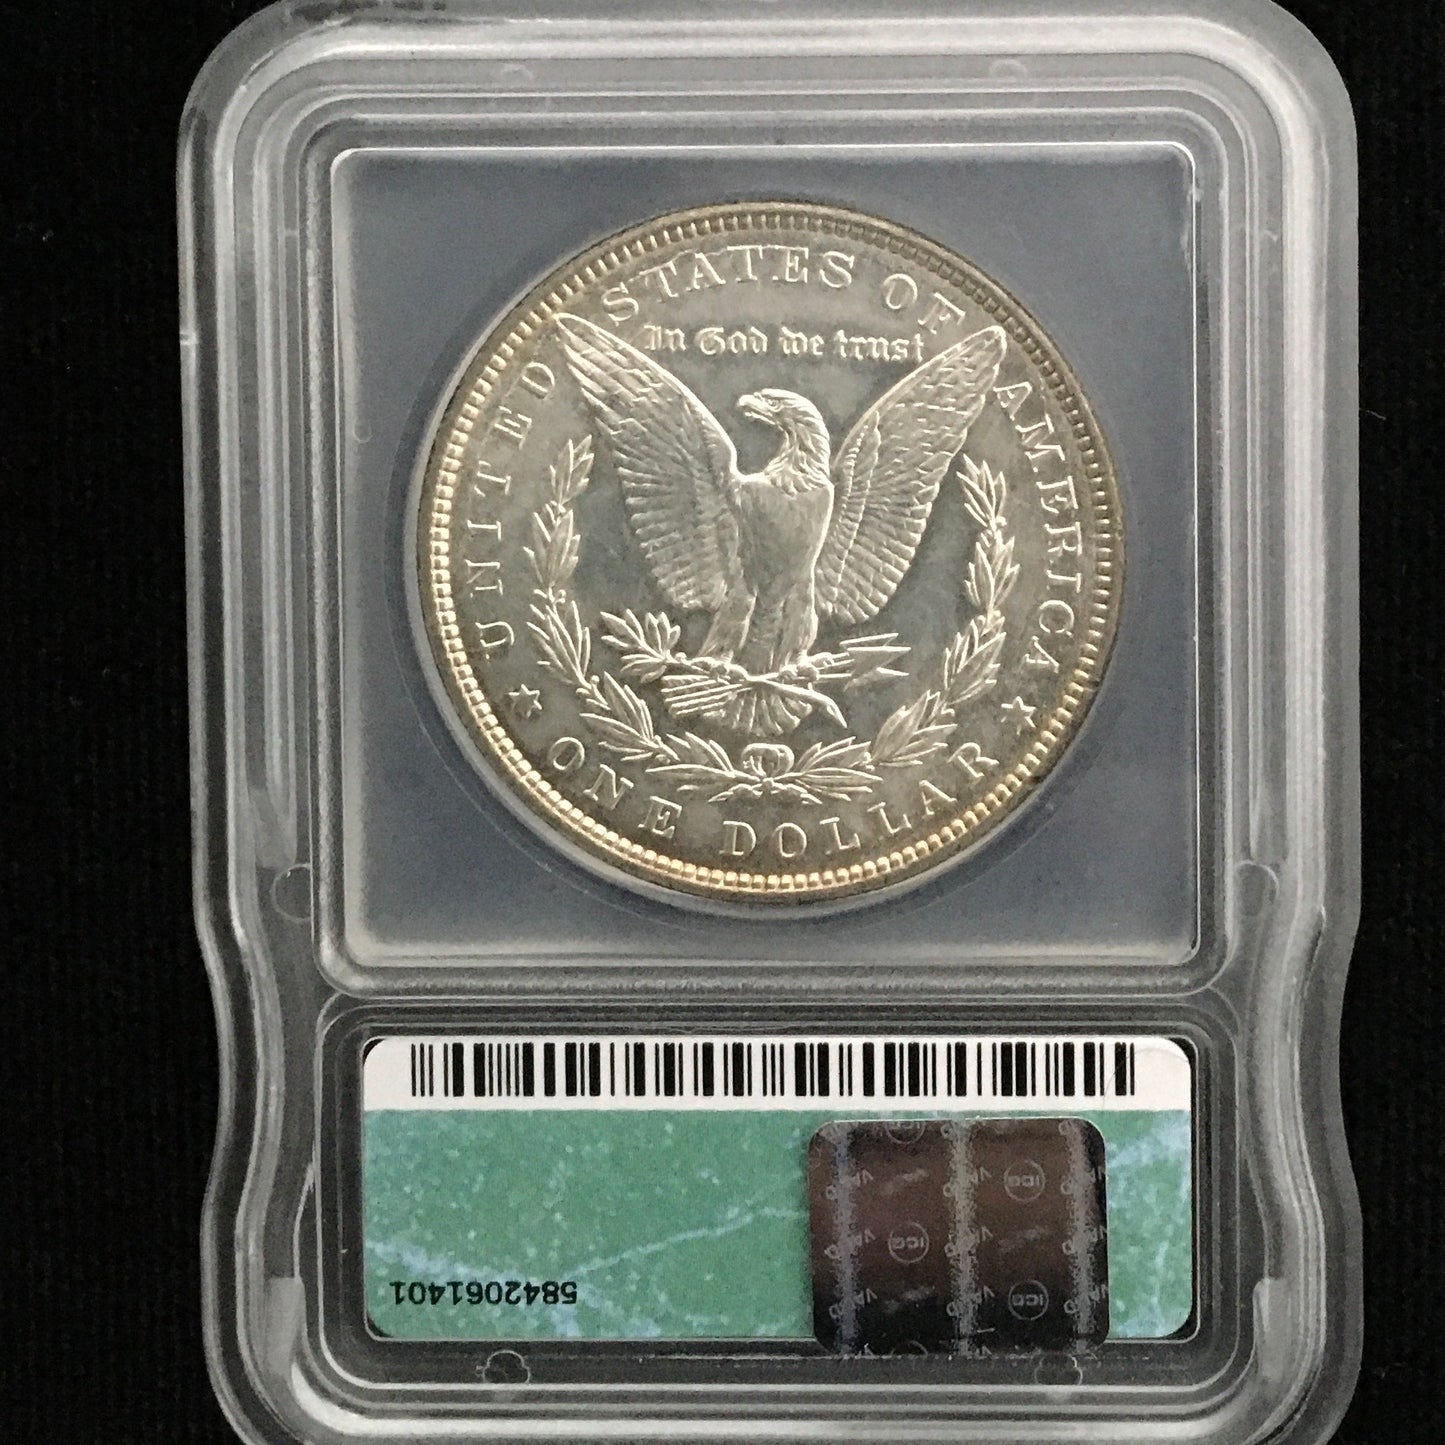 1 dólar de 1887 - Morgan Dollar